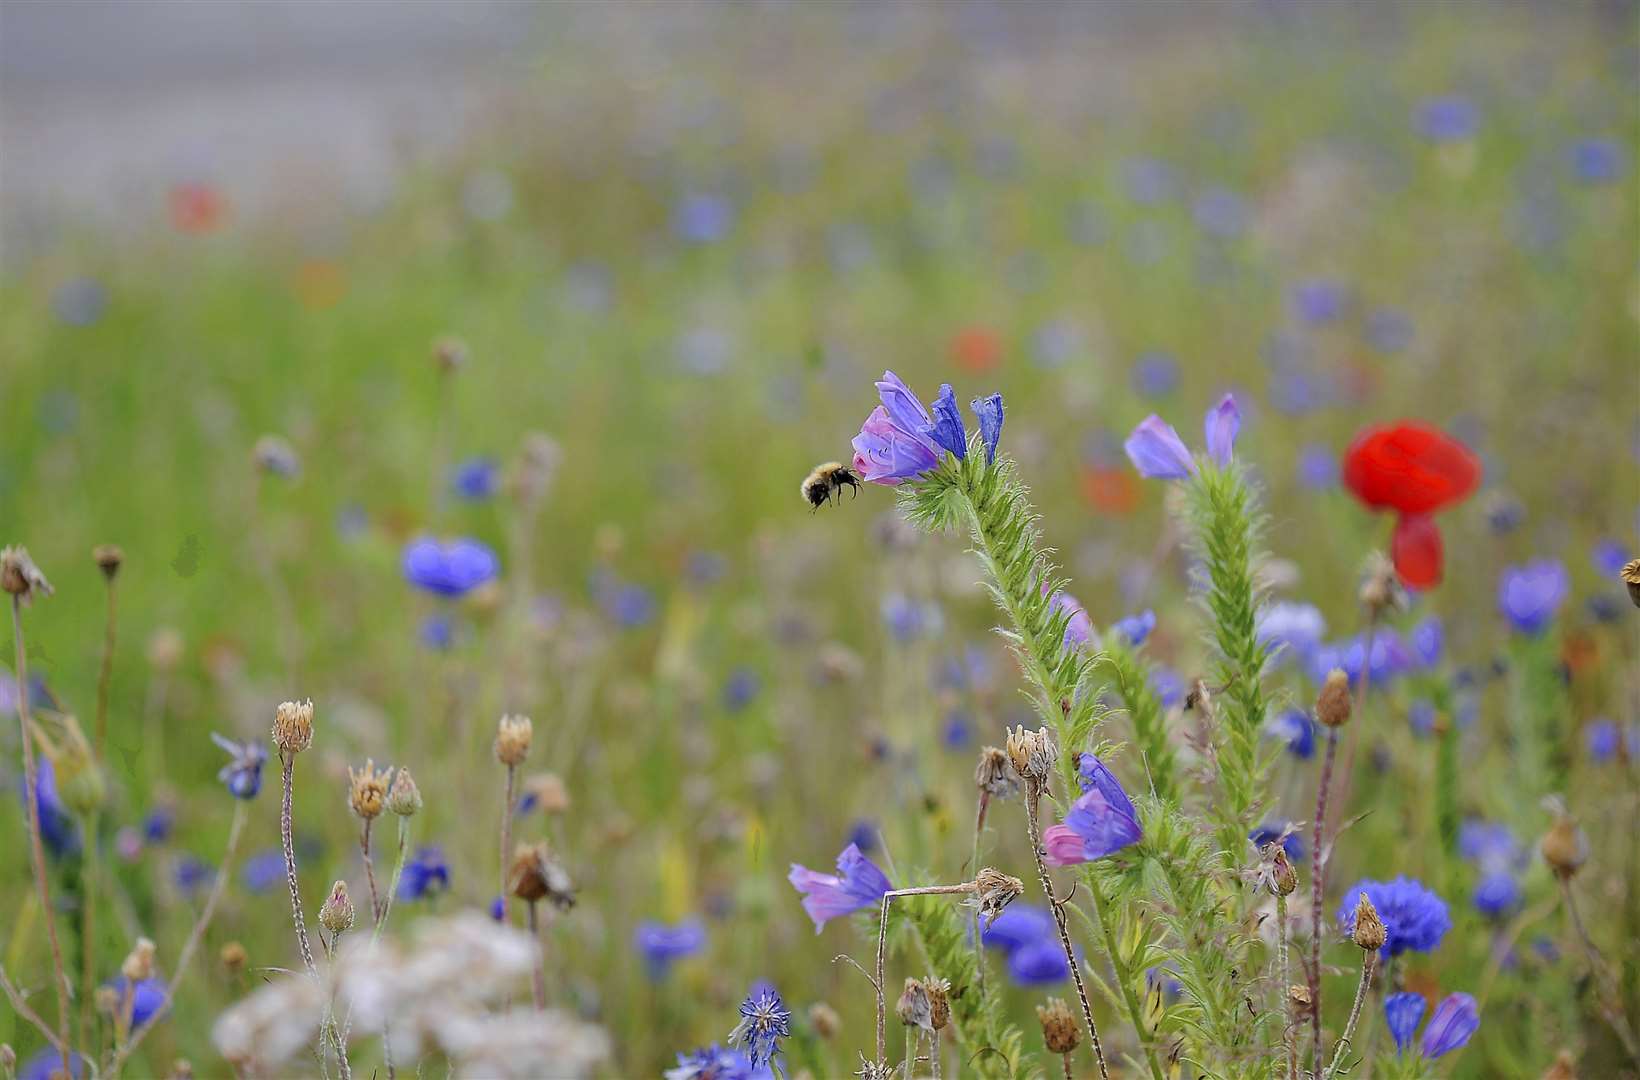 Planting wild flowers is one way to help vital pollinators thrive.